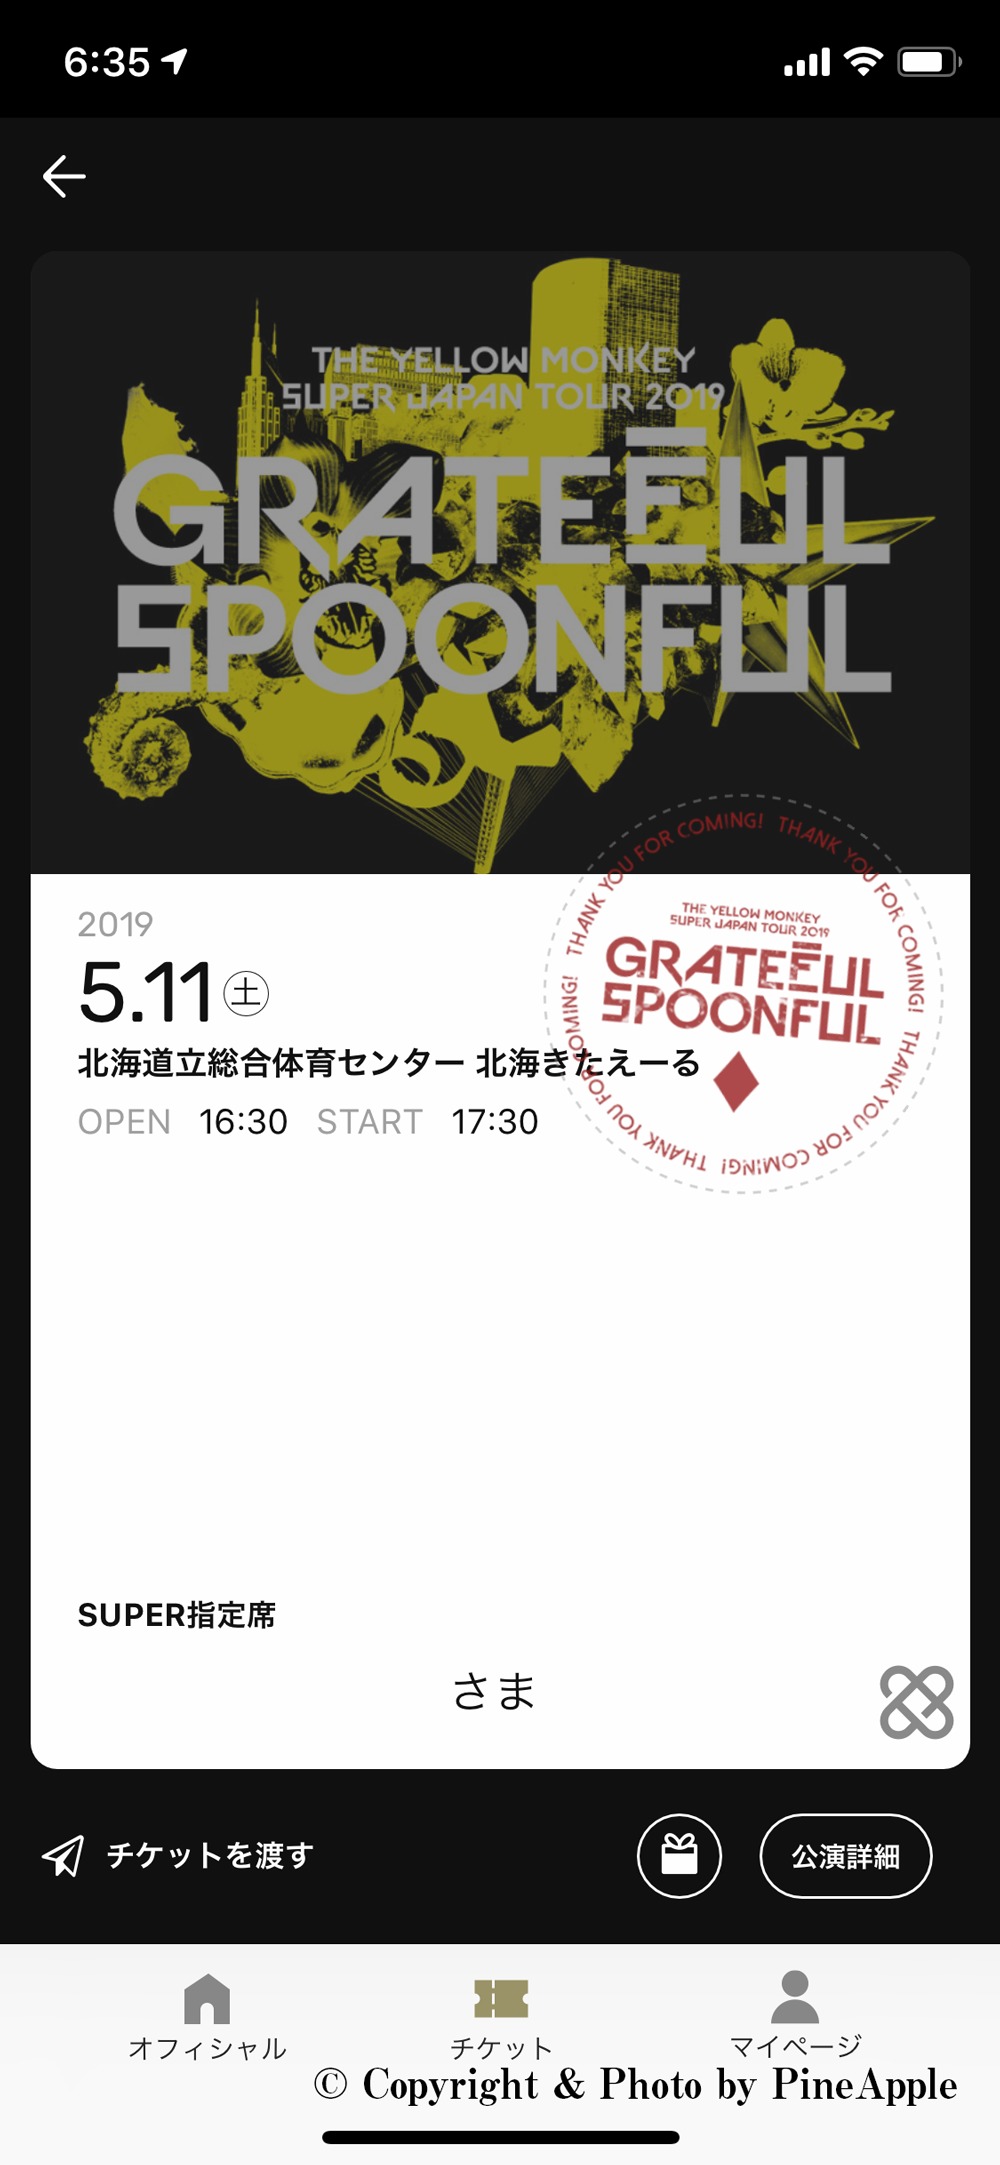 THE YELLOW MONKEY SUPER JAPAN TOUR 2019 GRATEFUL SPOONFUL